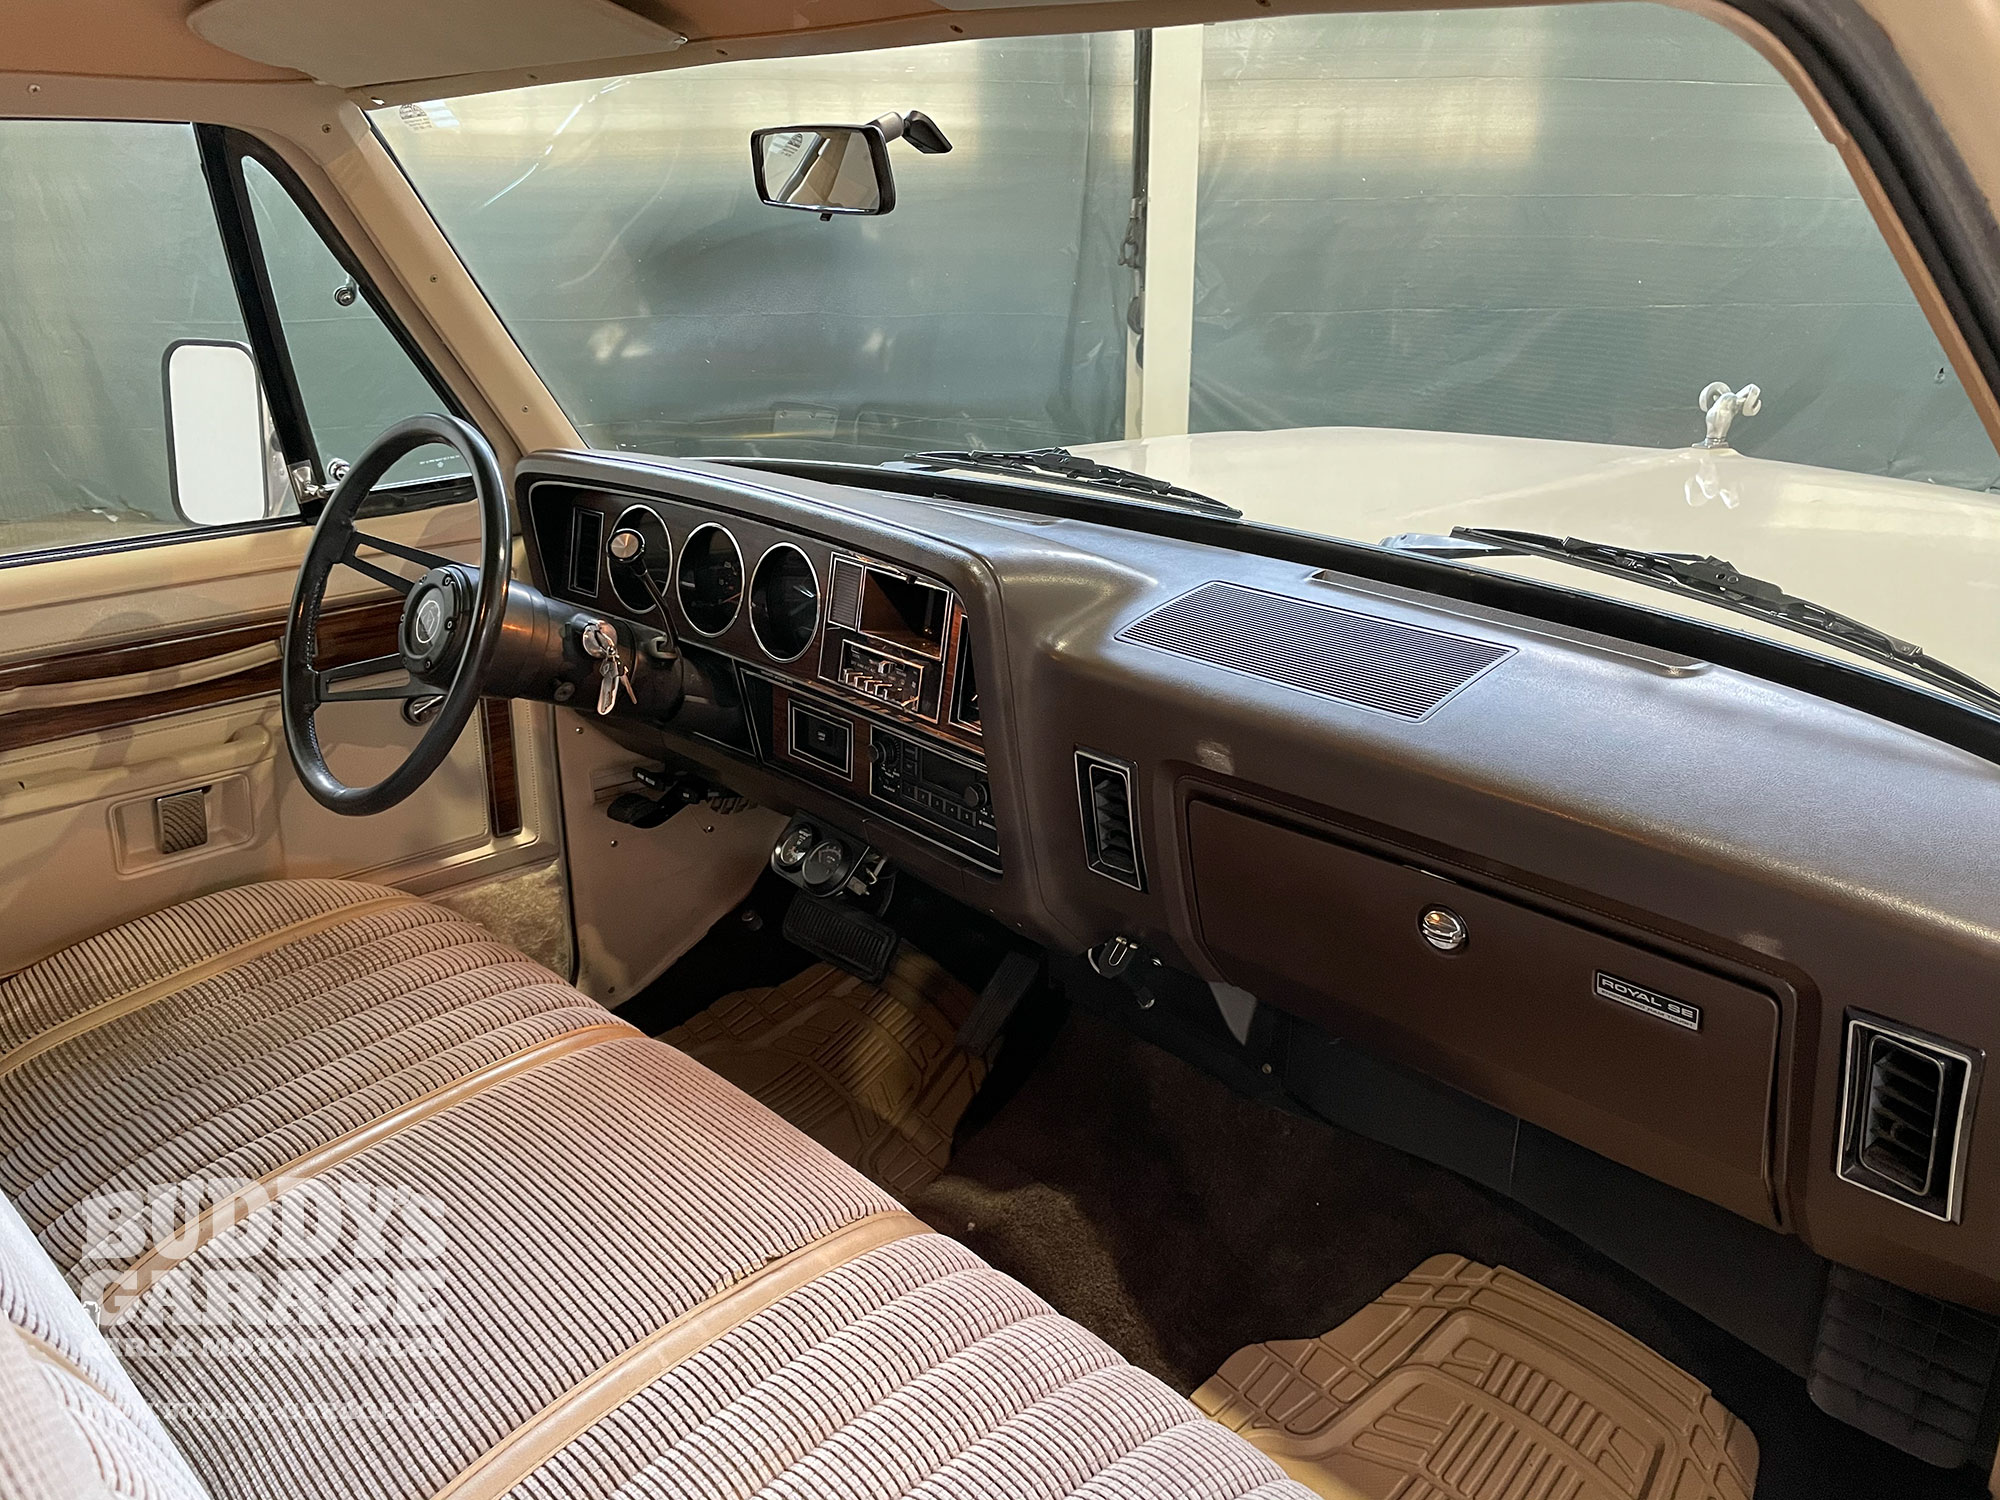 Dodge RAM 250 SE Prospector 1984 | Buddy's Garage Bad Oeynhausen